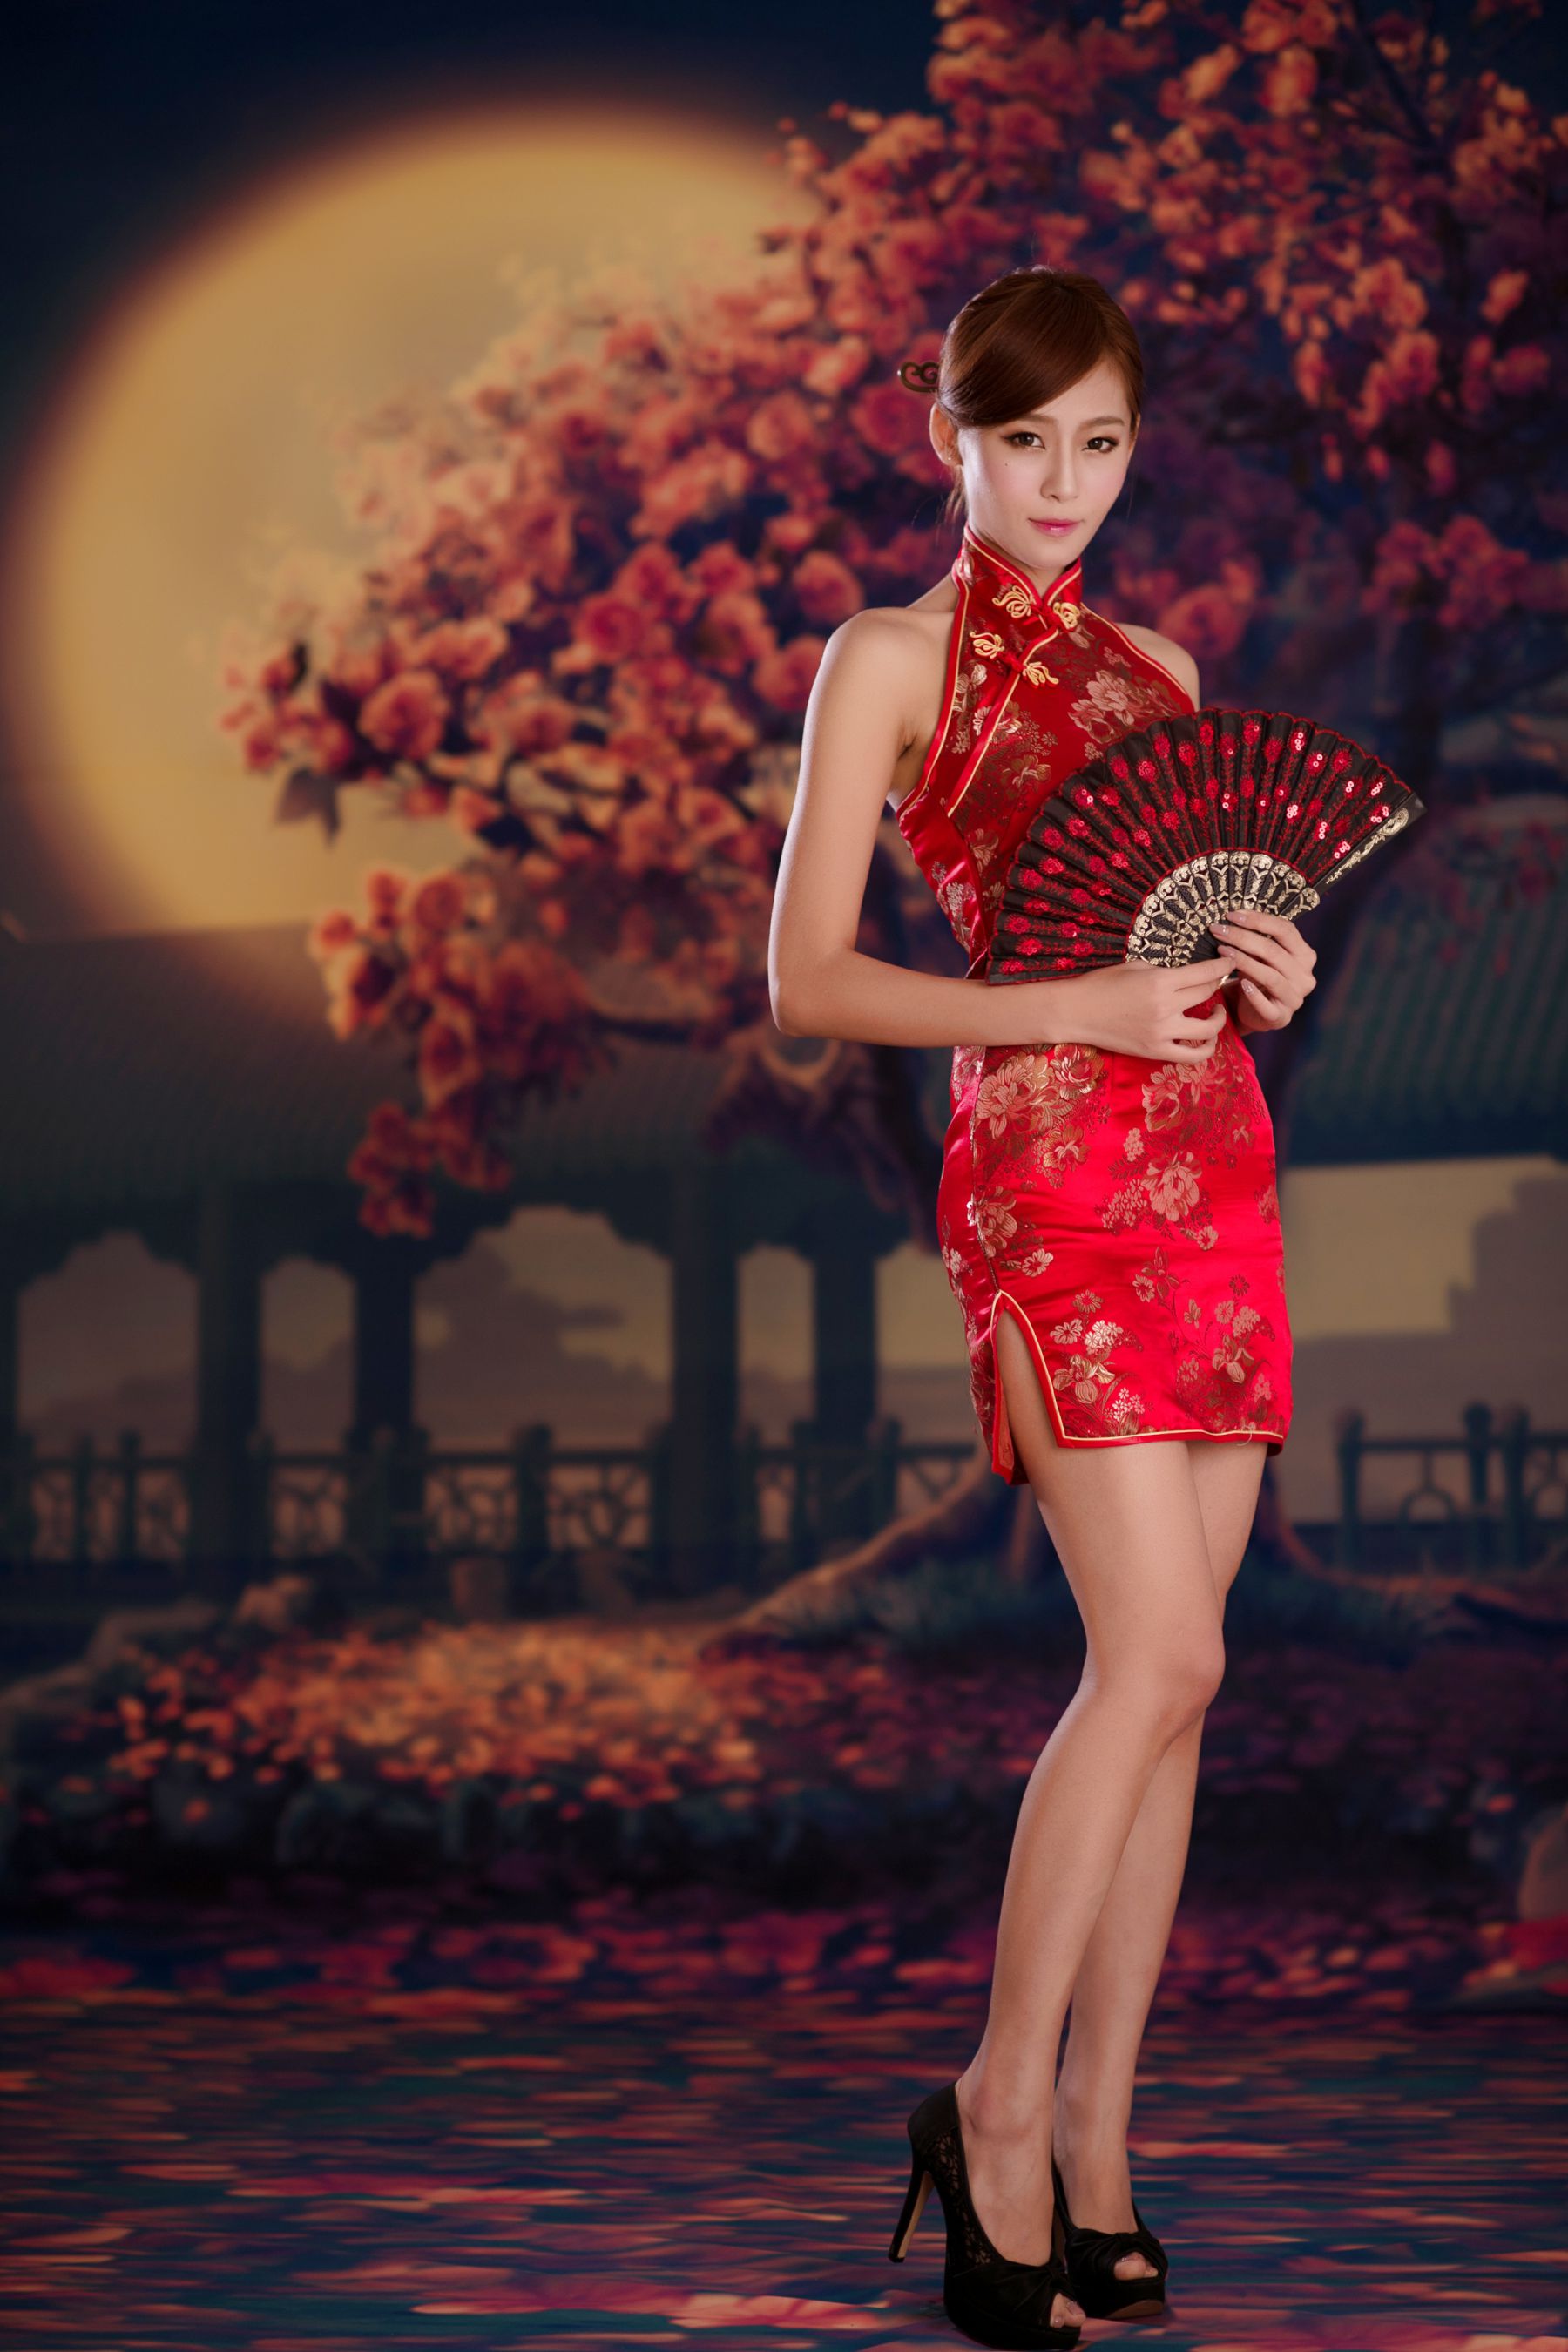 Taiwanese goddess Winnie small snow “classical red cheongsam” photo set